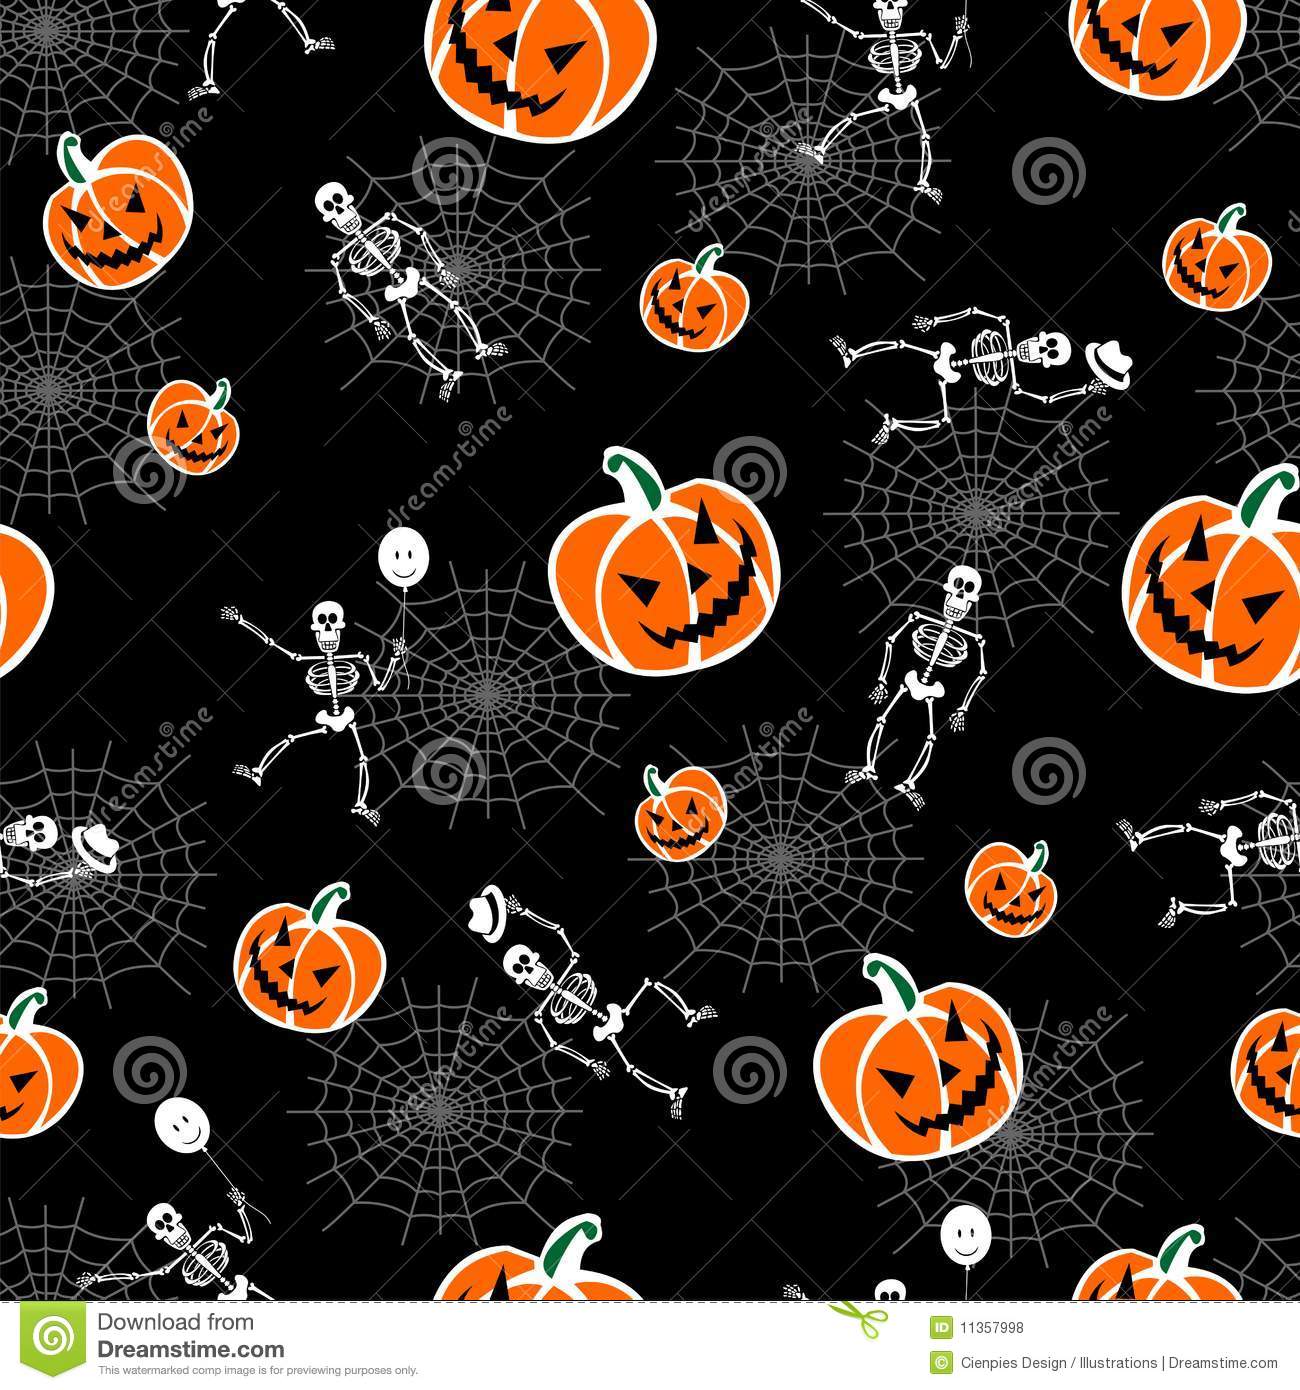 Halloween Skeleton Background Image